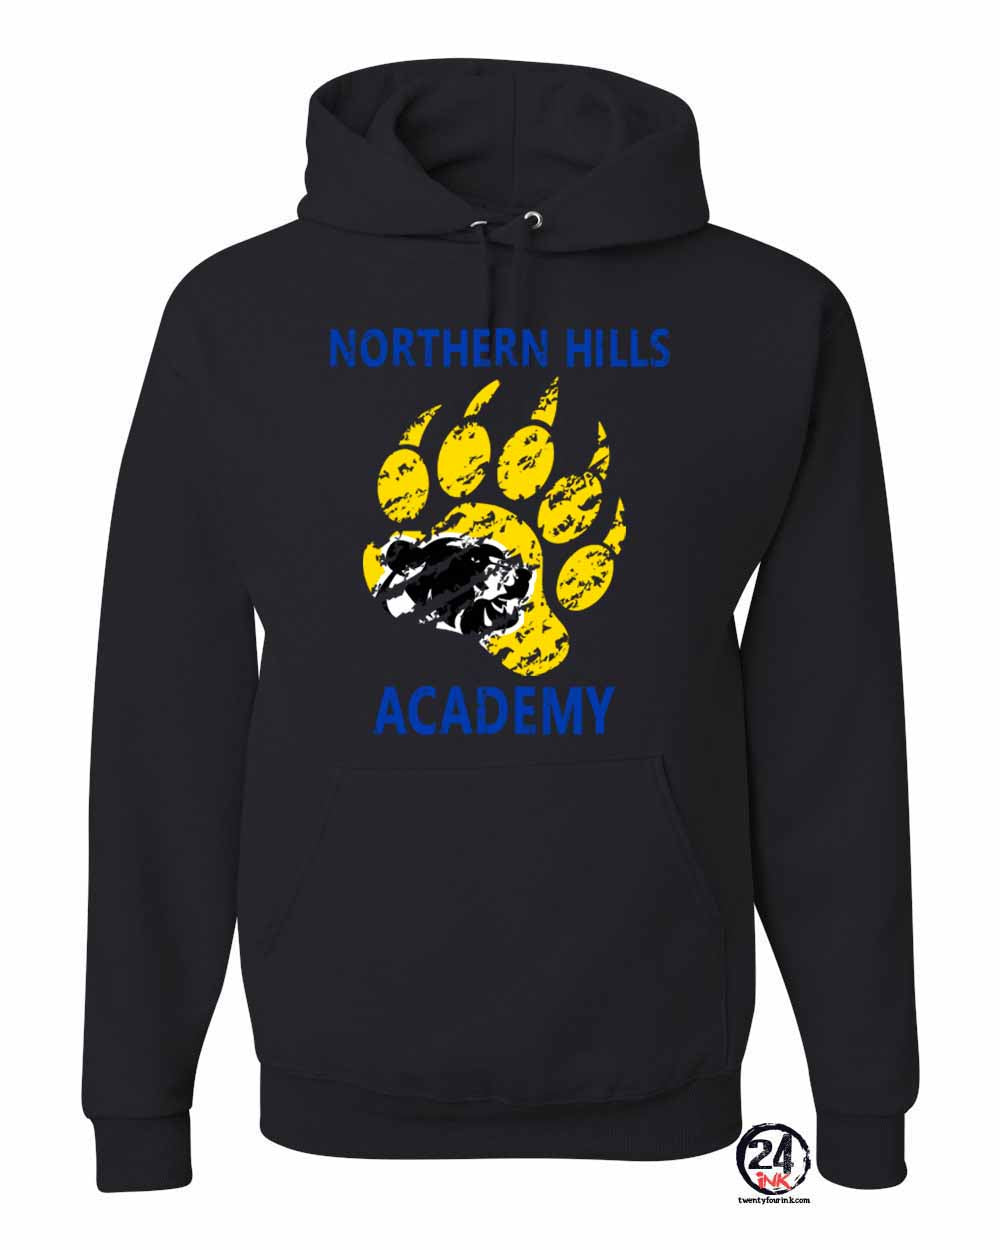 Northern Hills Design 3 Hooded Sweatshirt